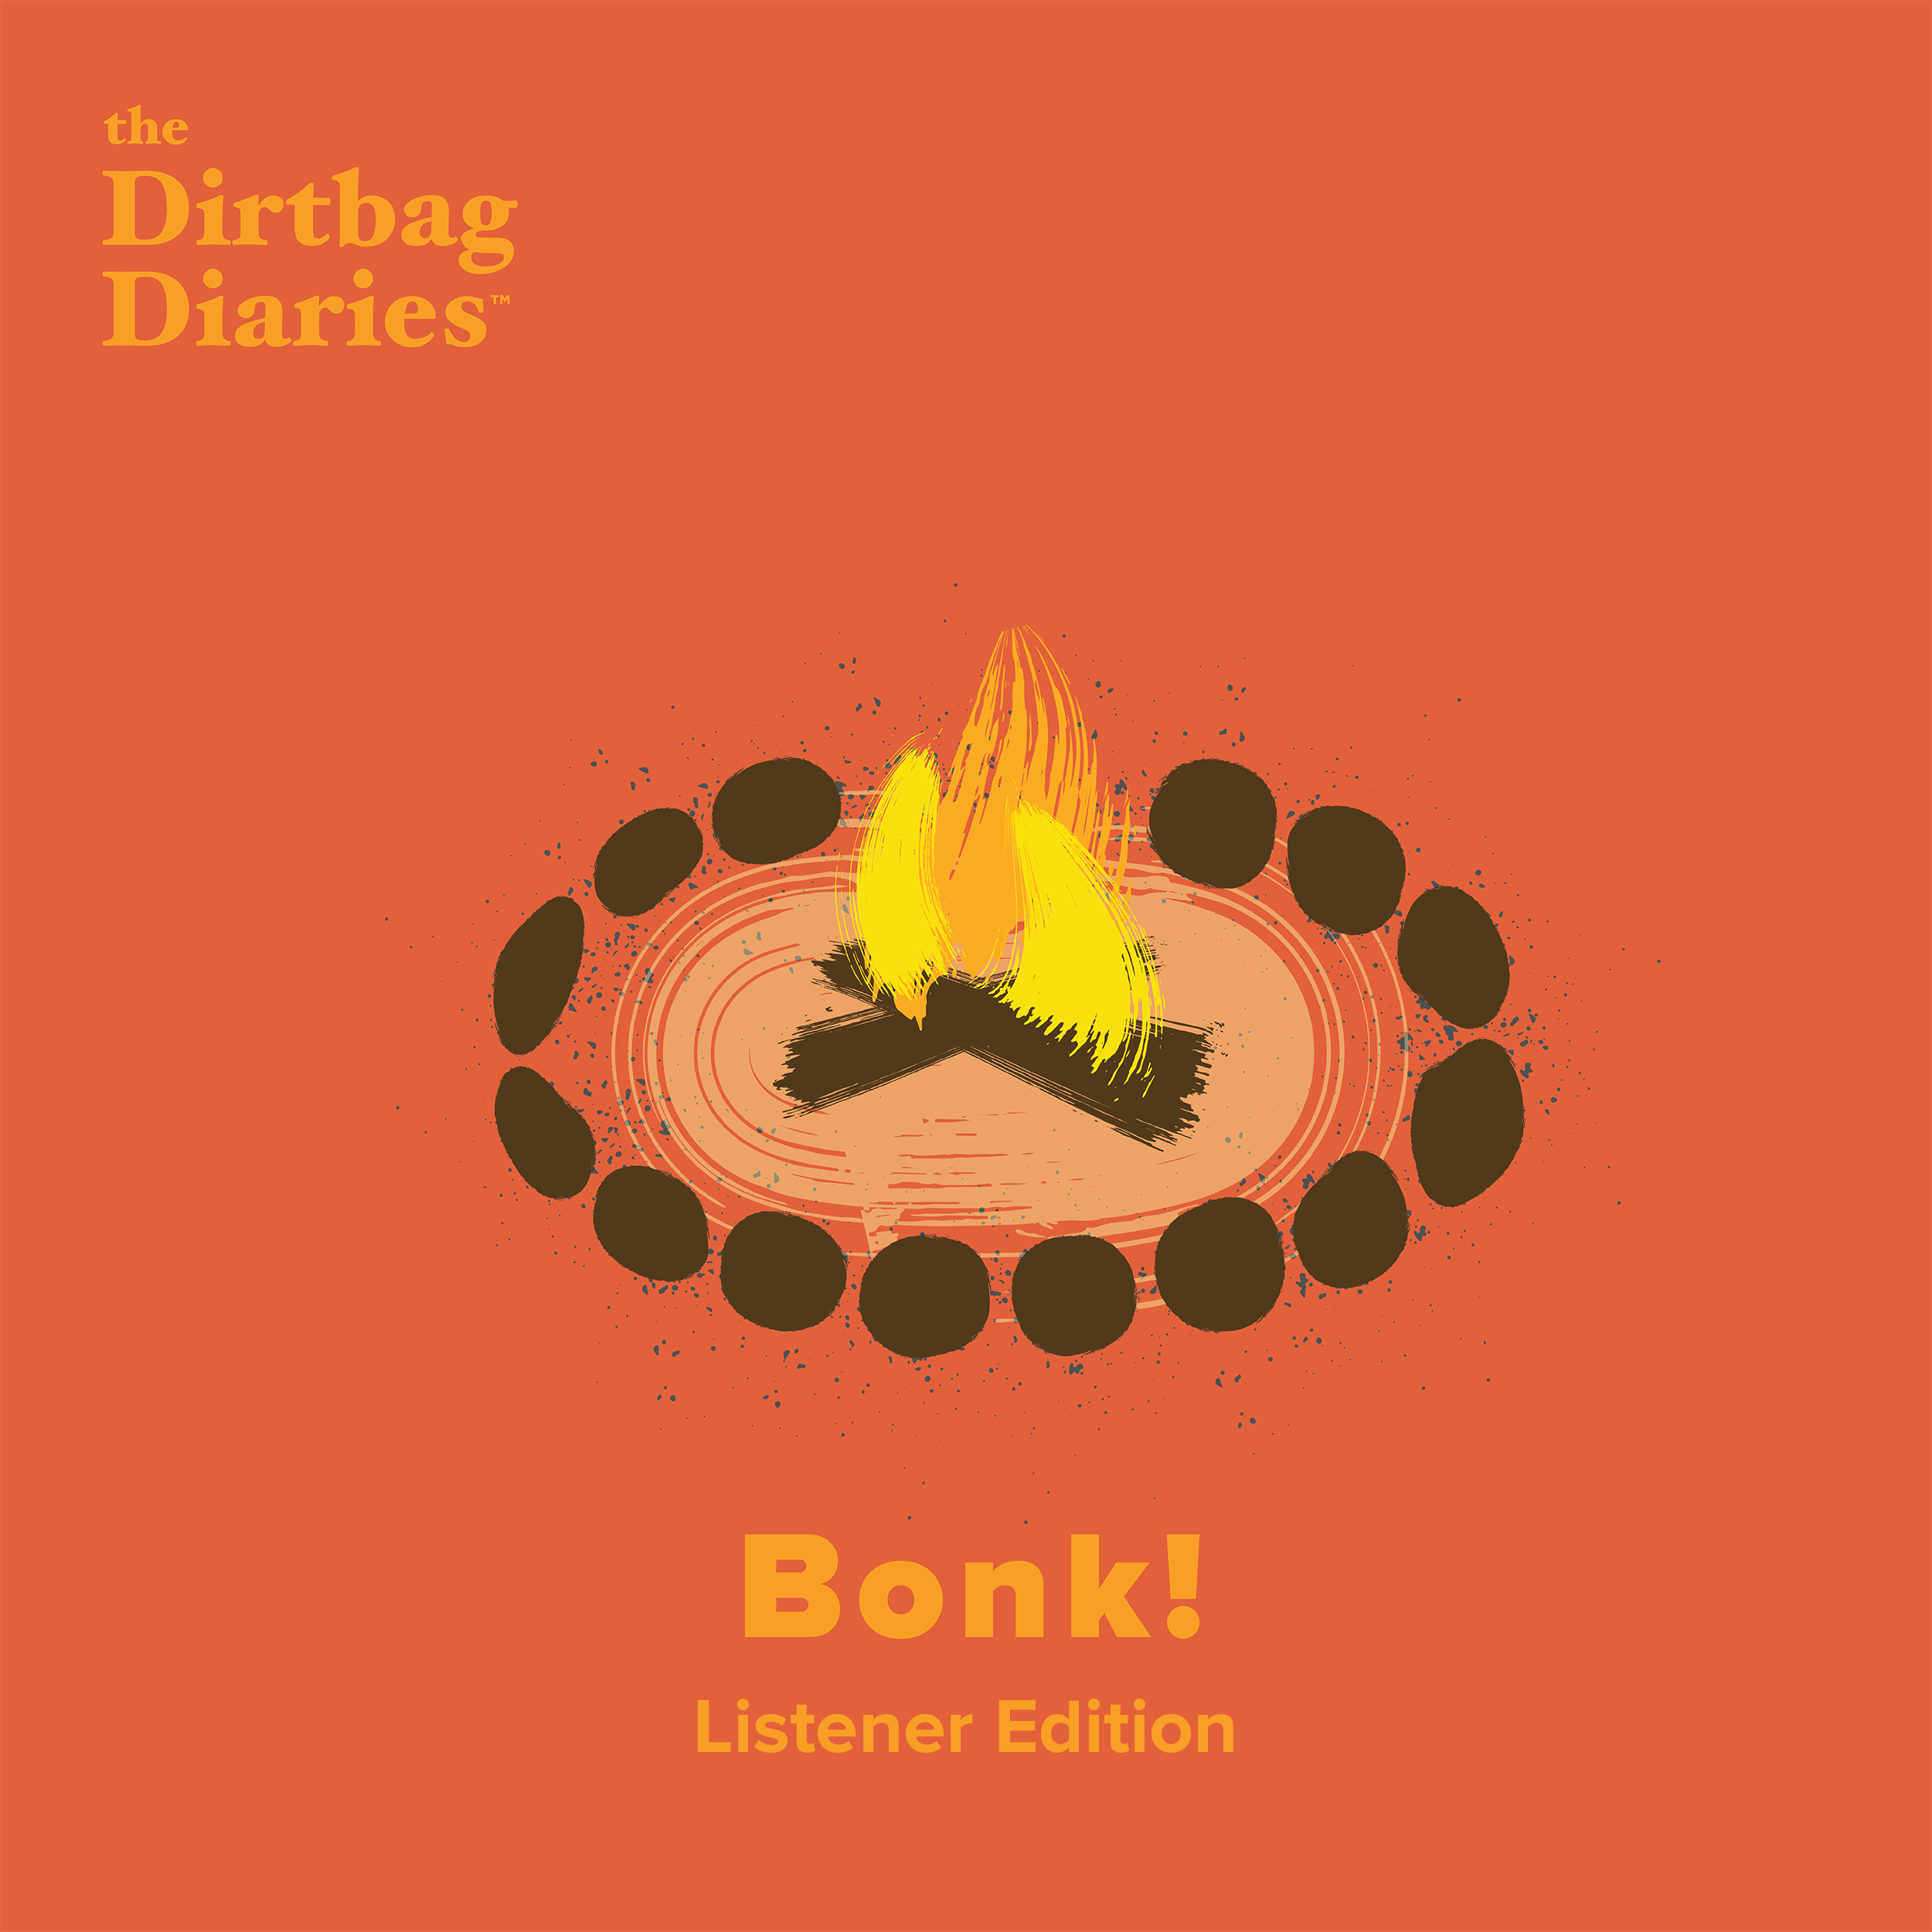 Diaries+ Preview: Bonk! Listener Edition